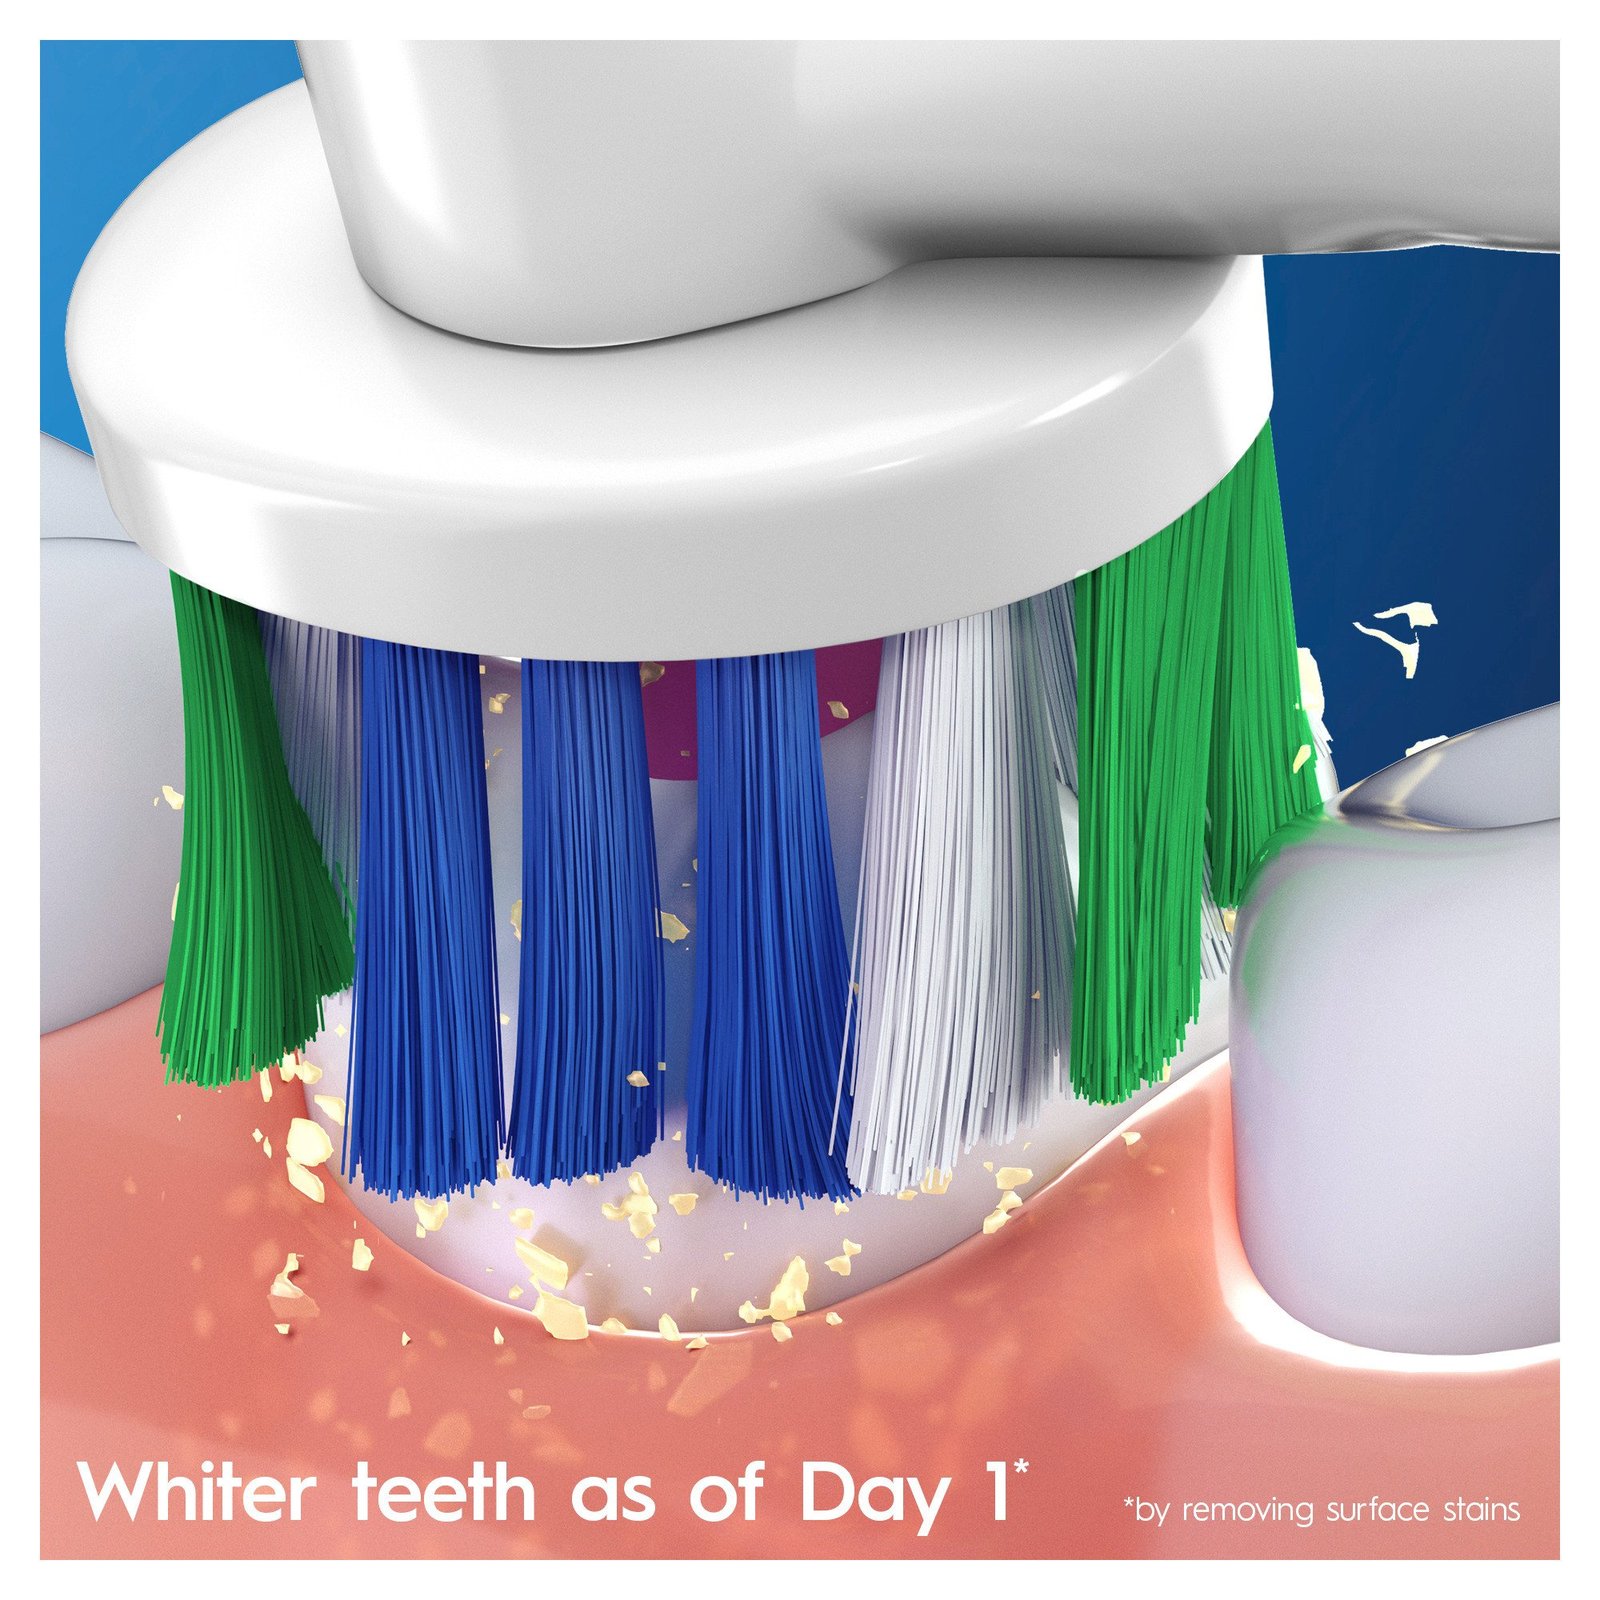 Oral-B 3D White Tandborsthuvud 3 st